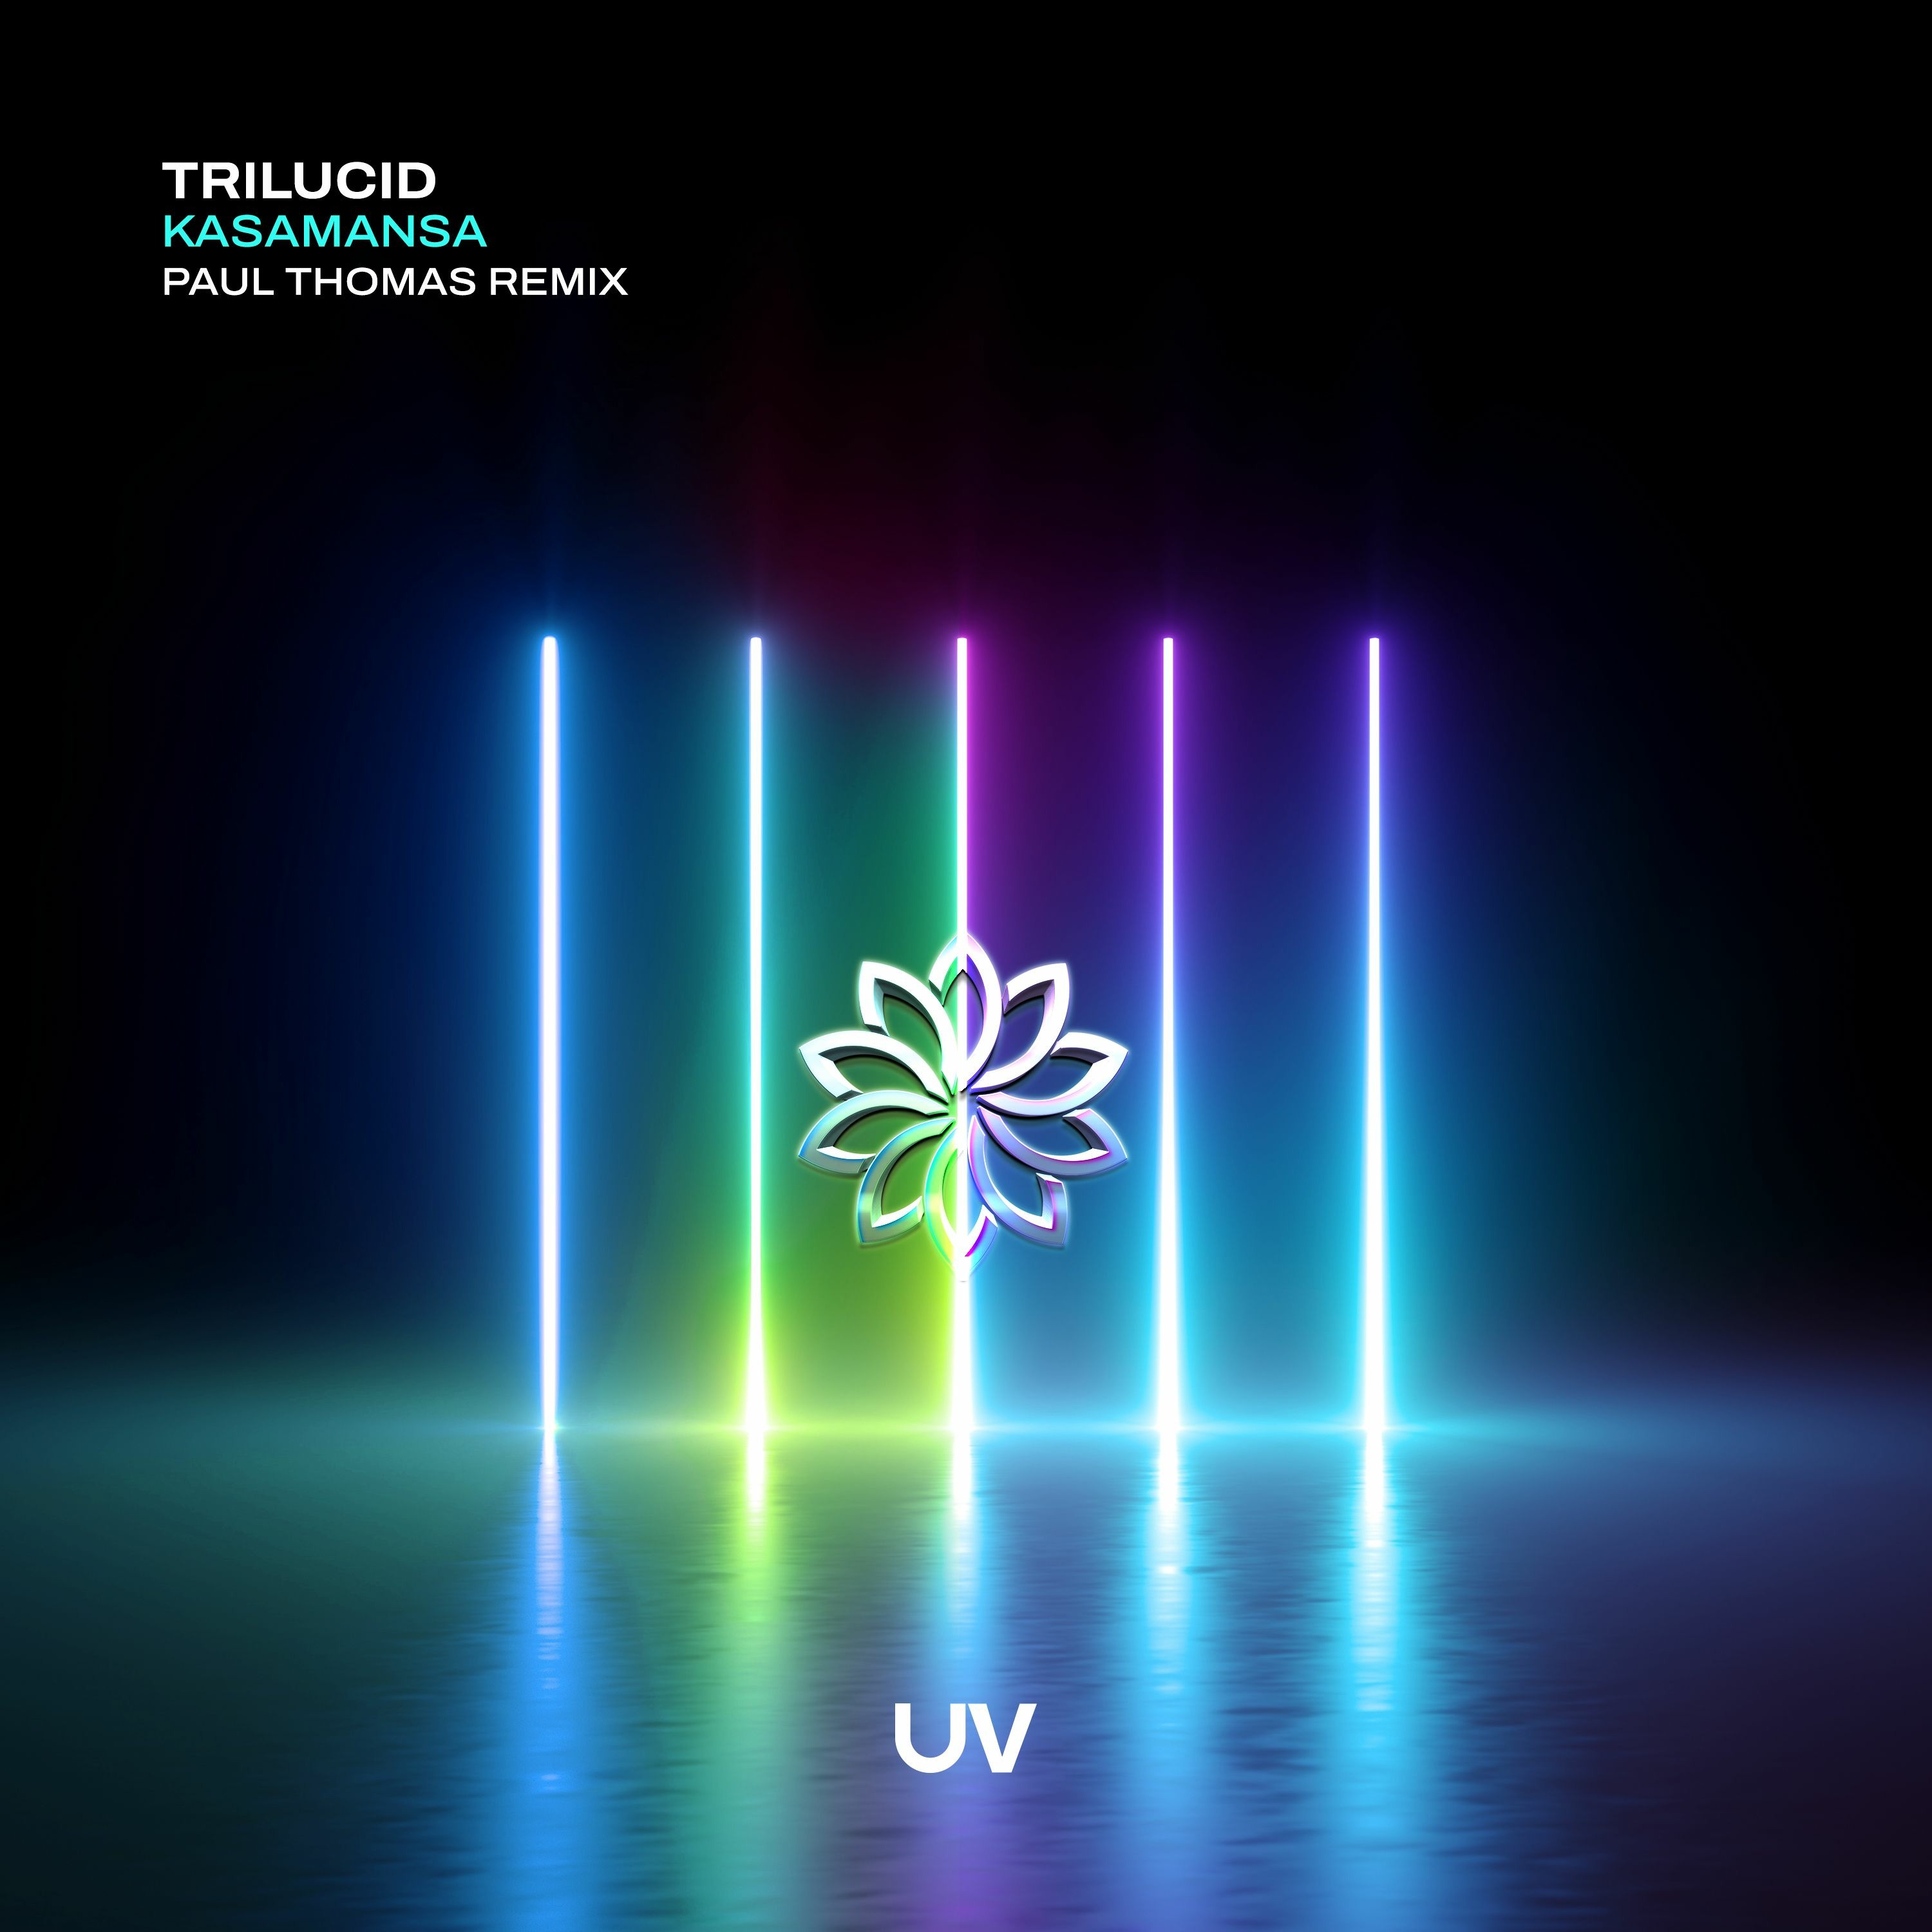 Trilucid - Kasamansa (Paul Thomas Remix) [UV]